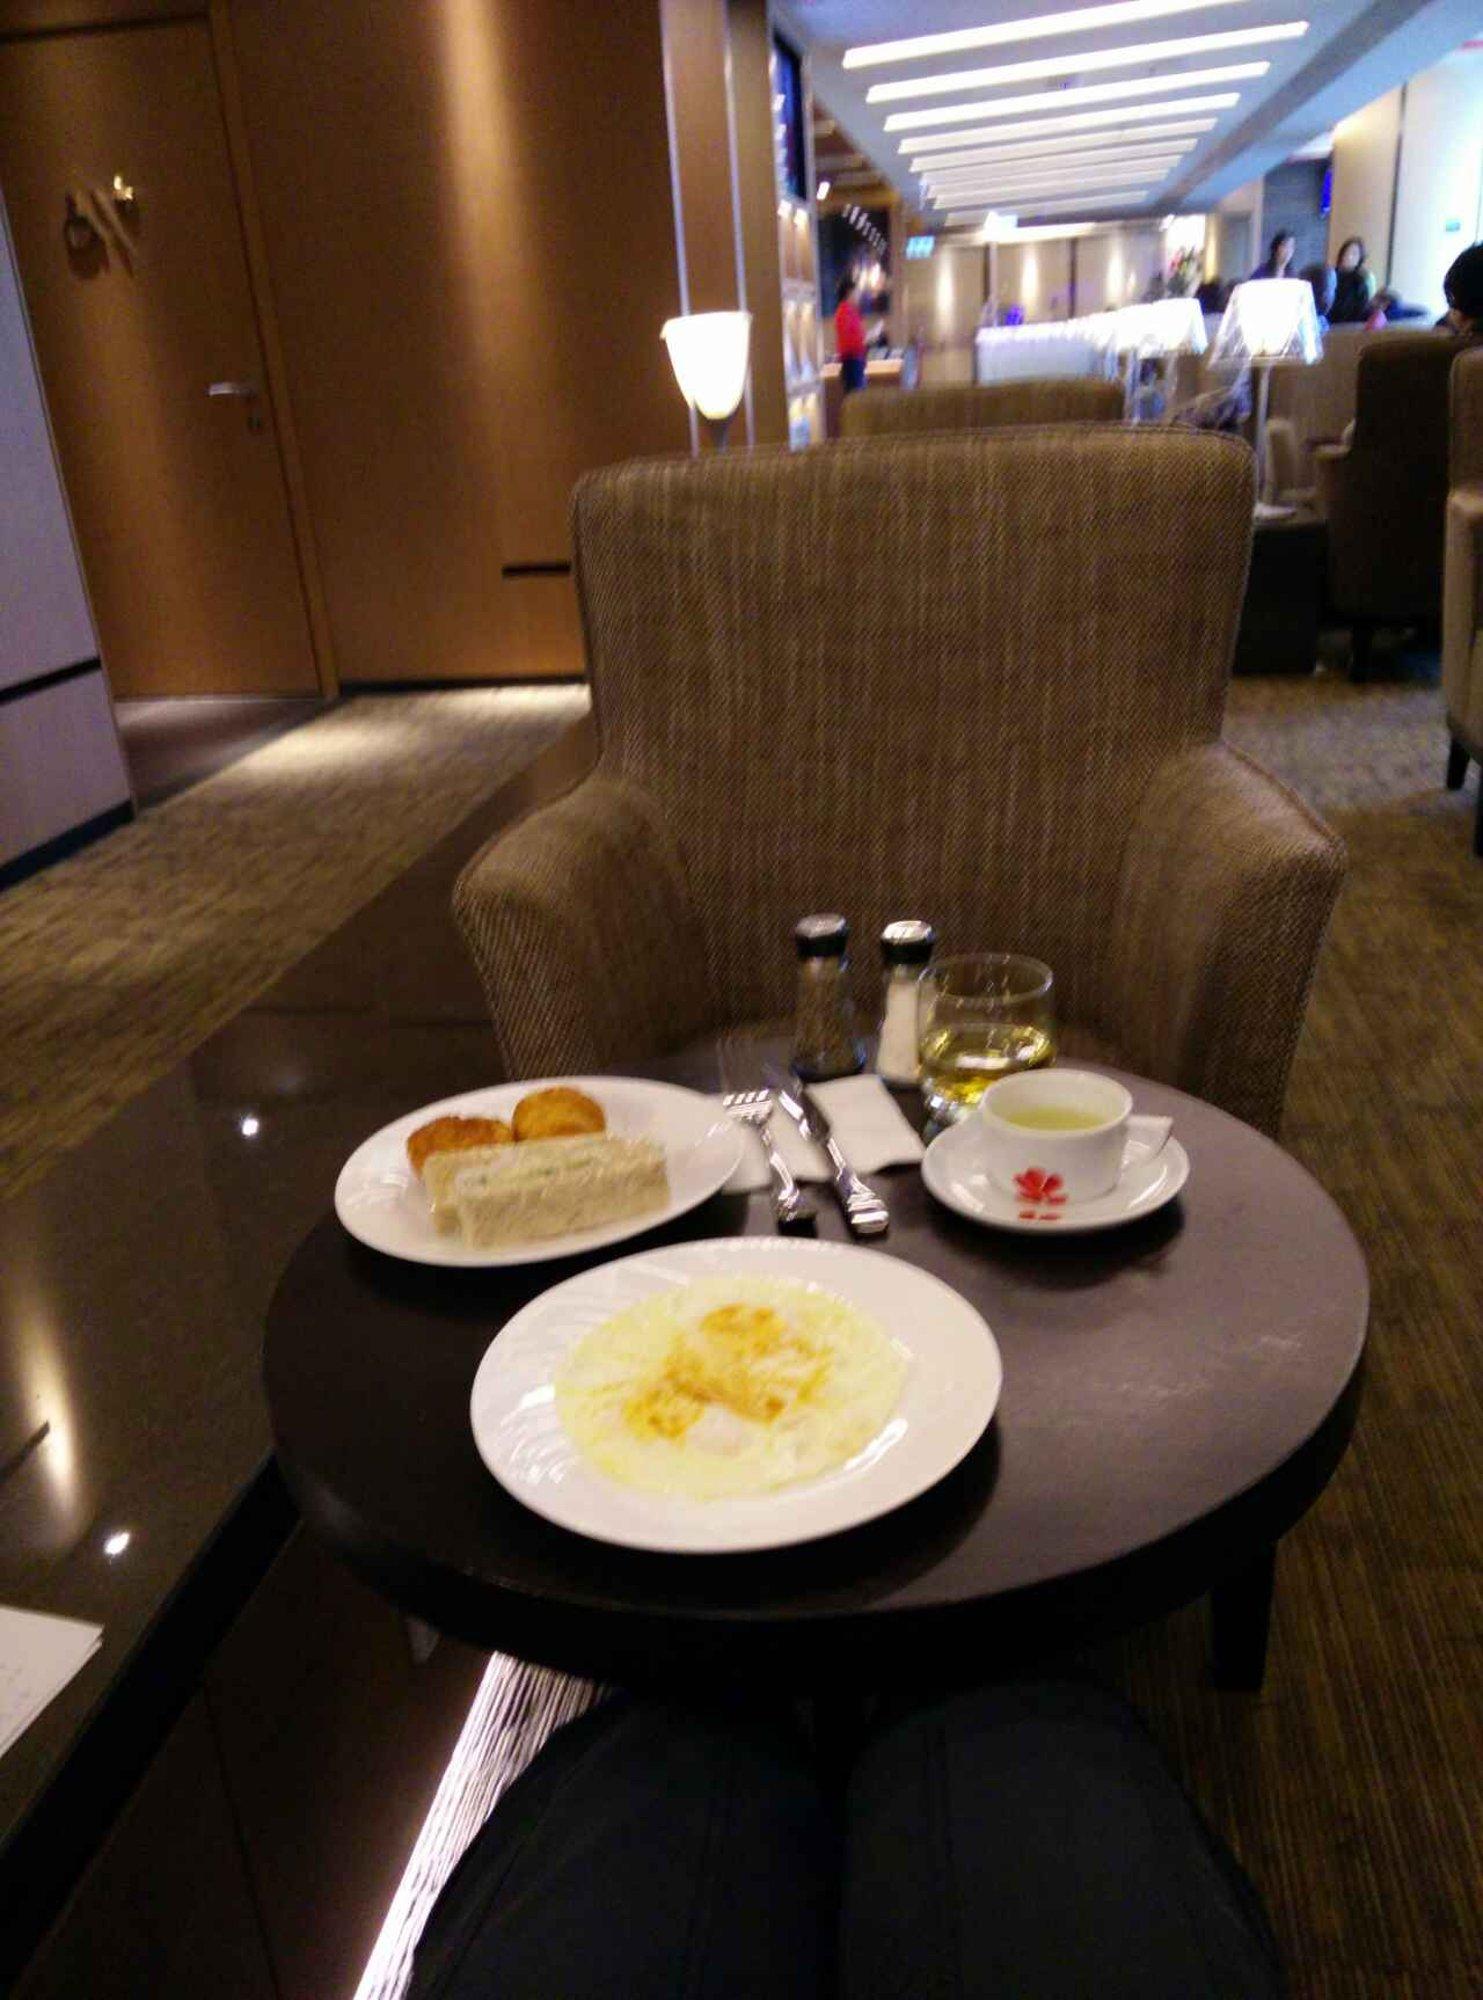 Hong Kong Airlines VIP Lounge (Club Bauhinia) image 10 of 40